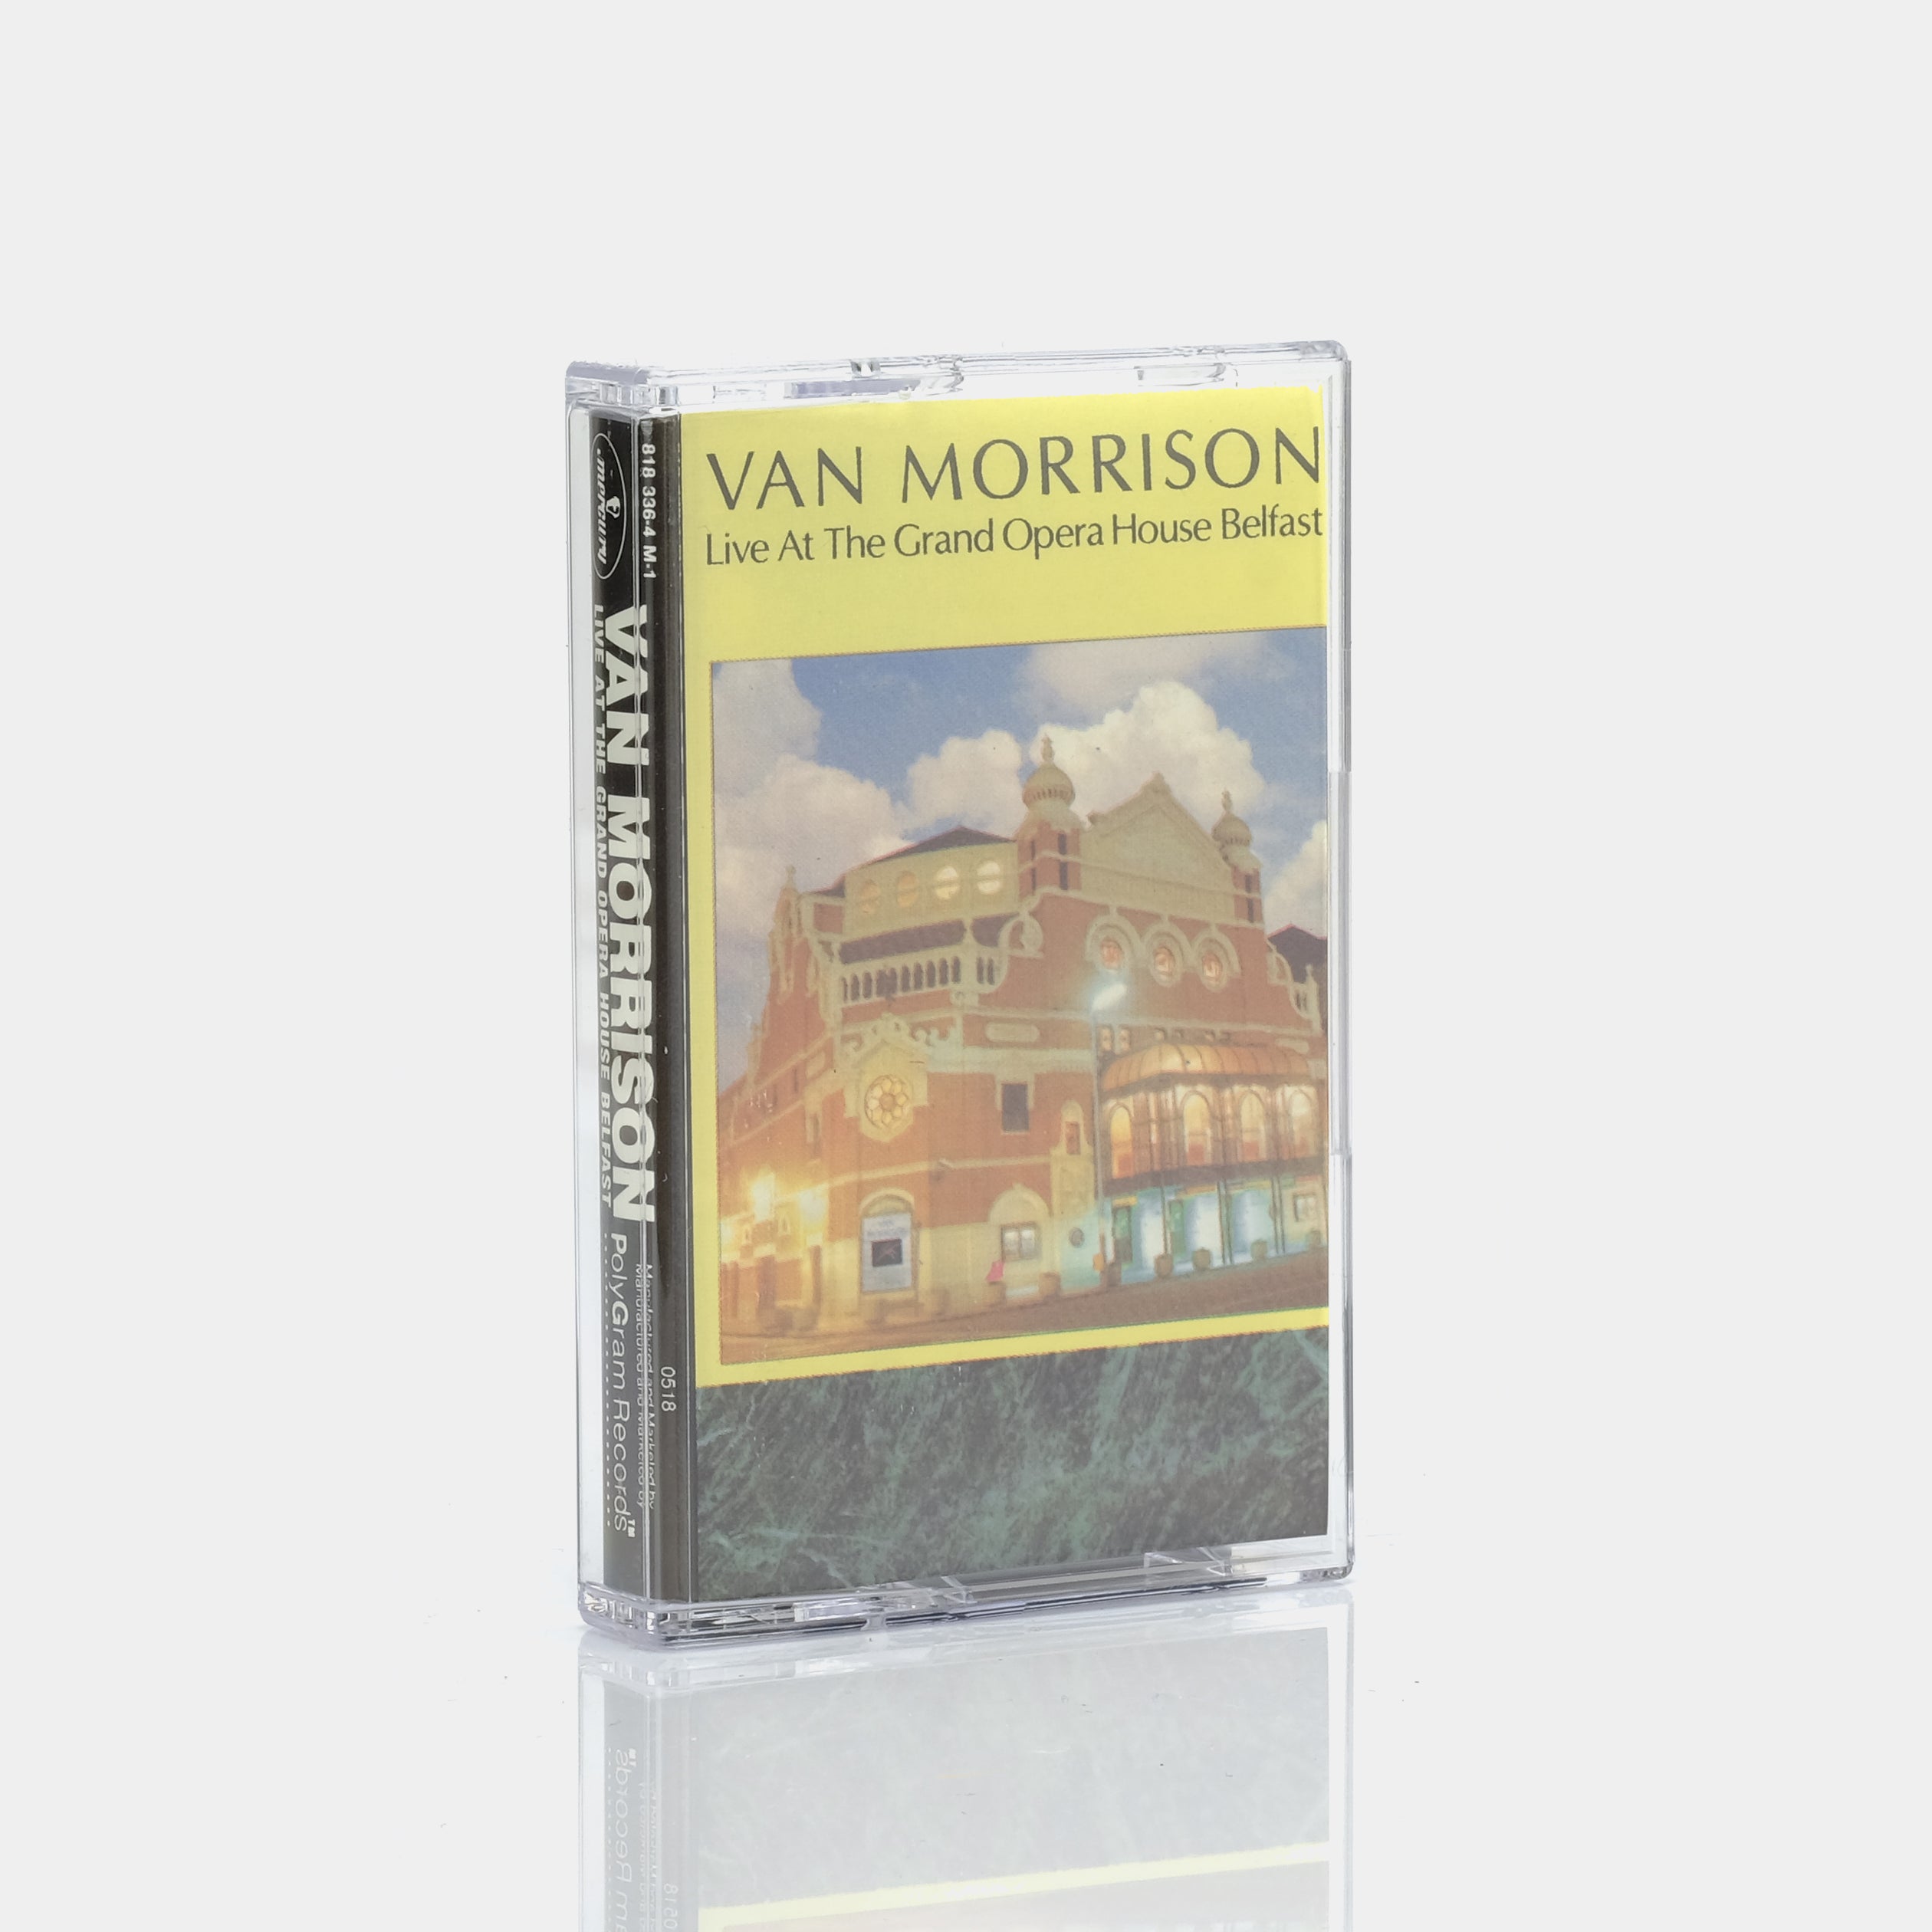 Van Morrison - Live At The Grand Opera House Belfast Cassette Tape